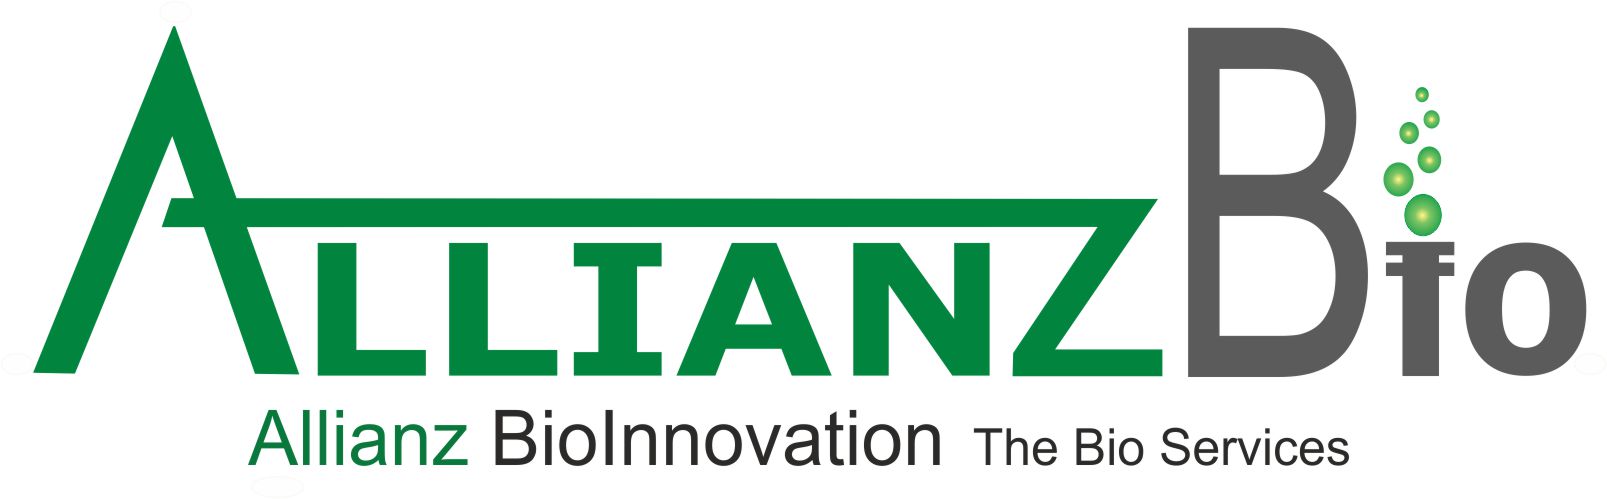 Allianz Bioinnovation-logo.jpg